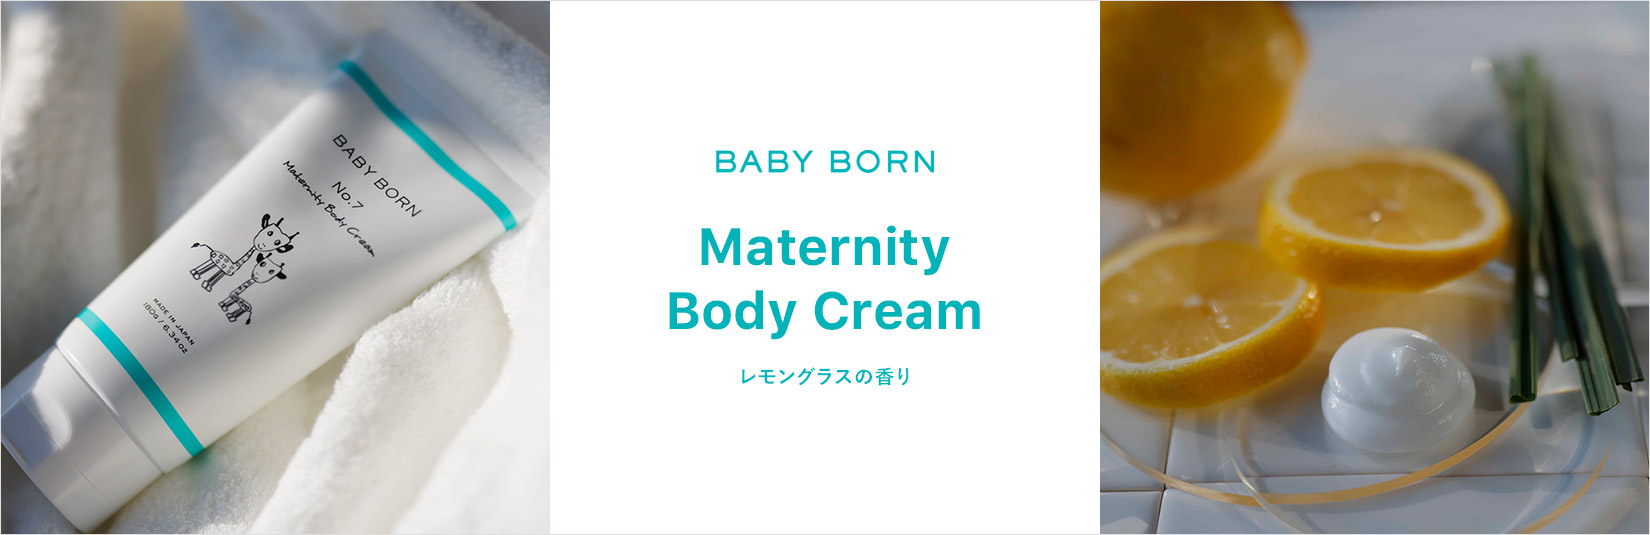 BABY BORN Maternity Body Creamが登場！